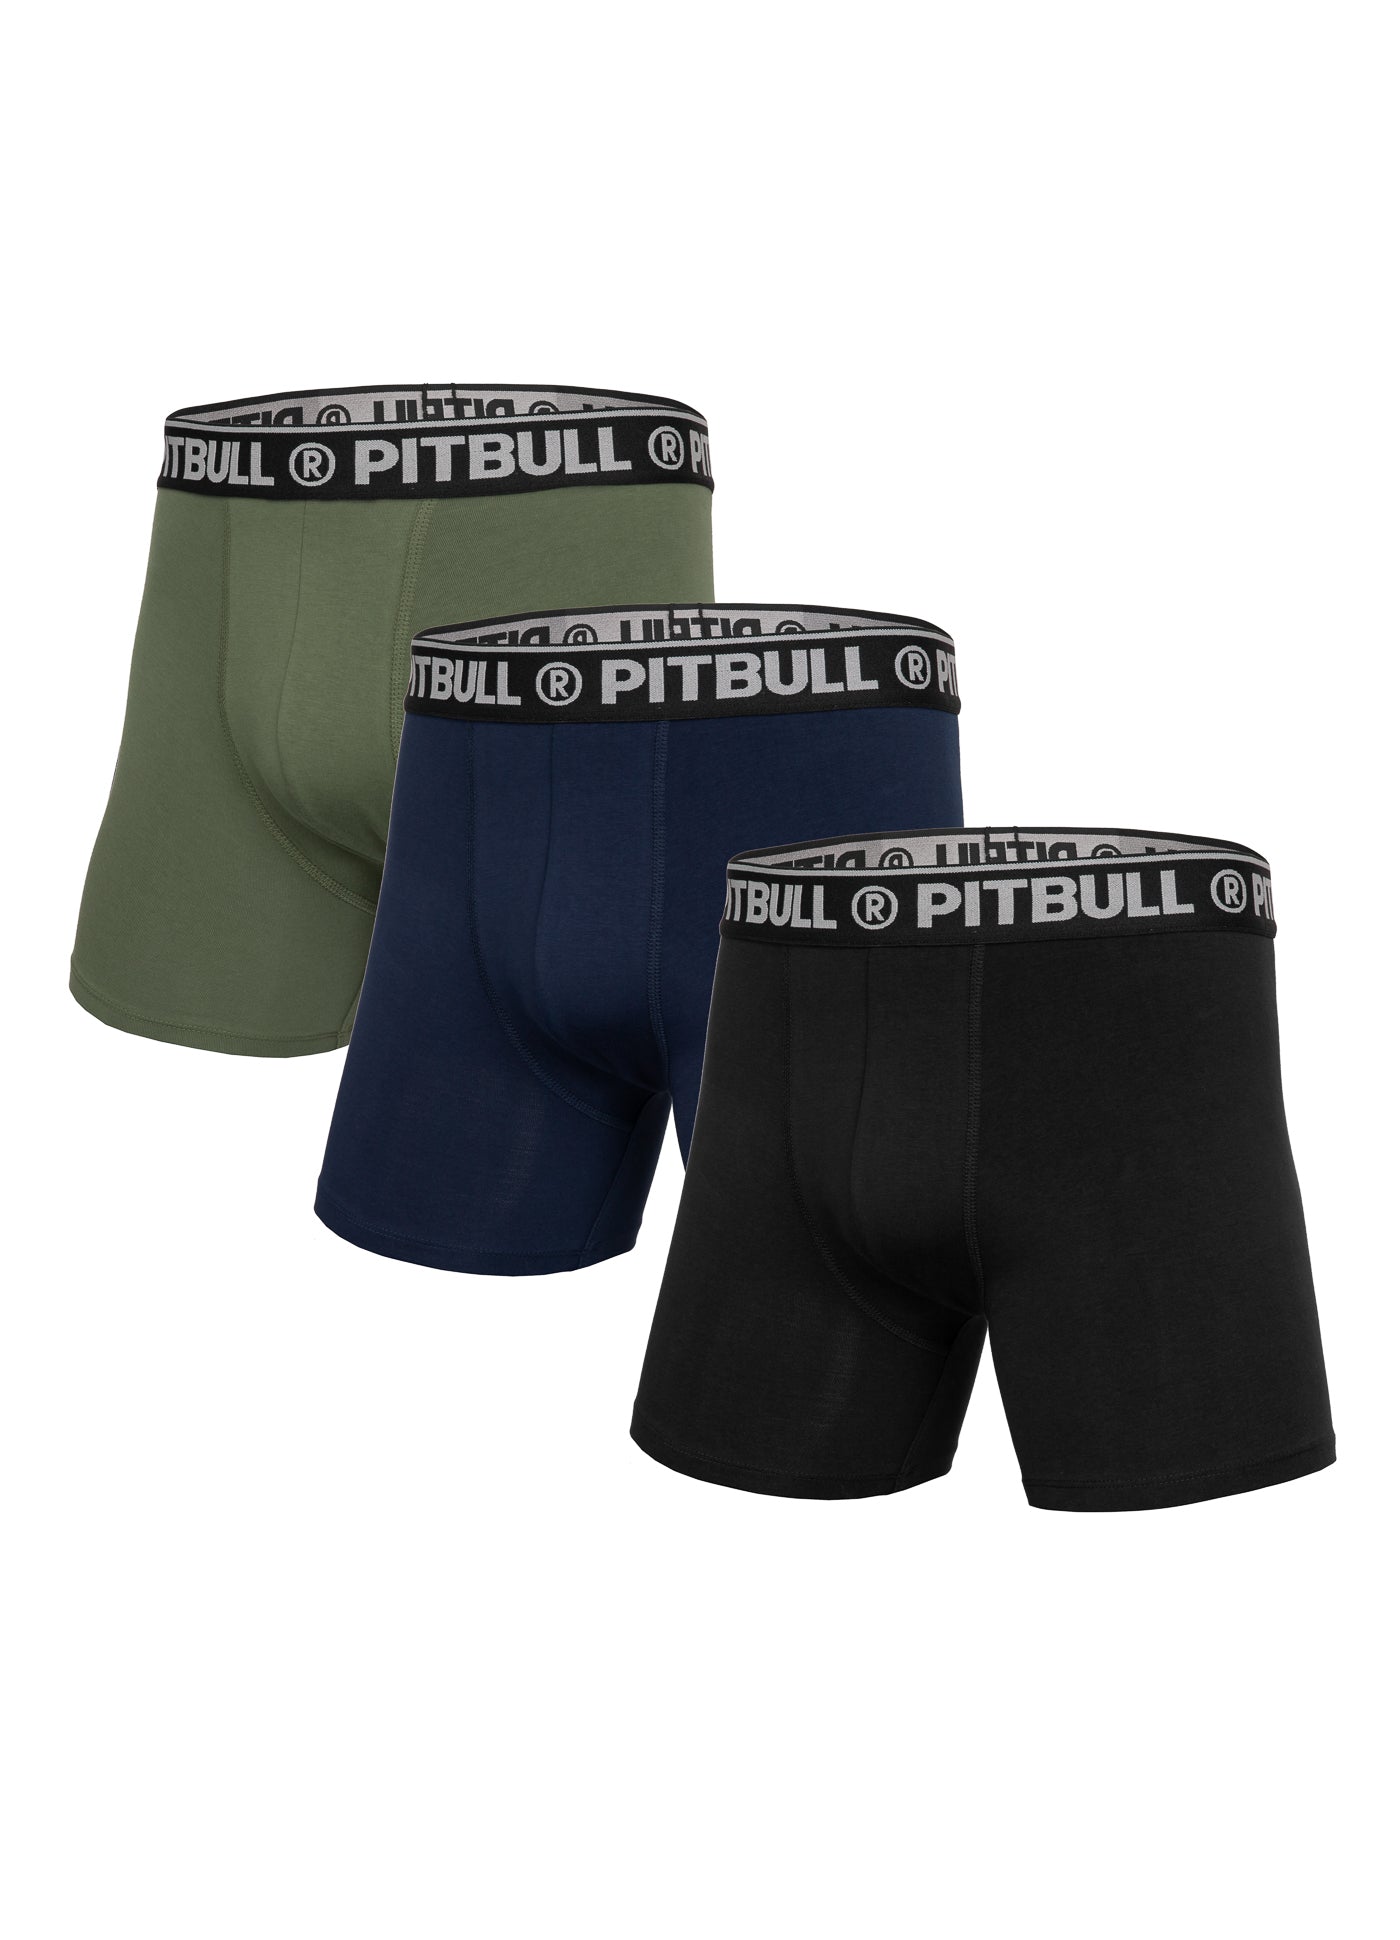 Boxer Shorts VI 3pack Olive/Dark Navy/Black - Pitbull West Coast  UK Store